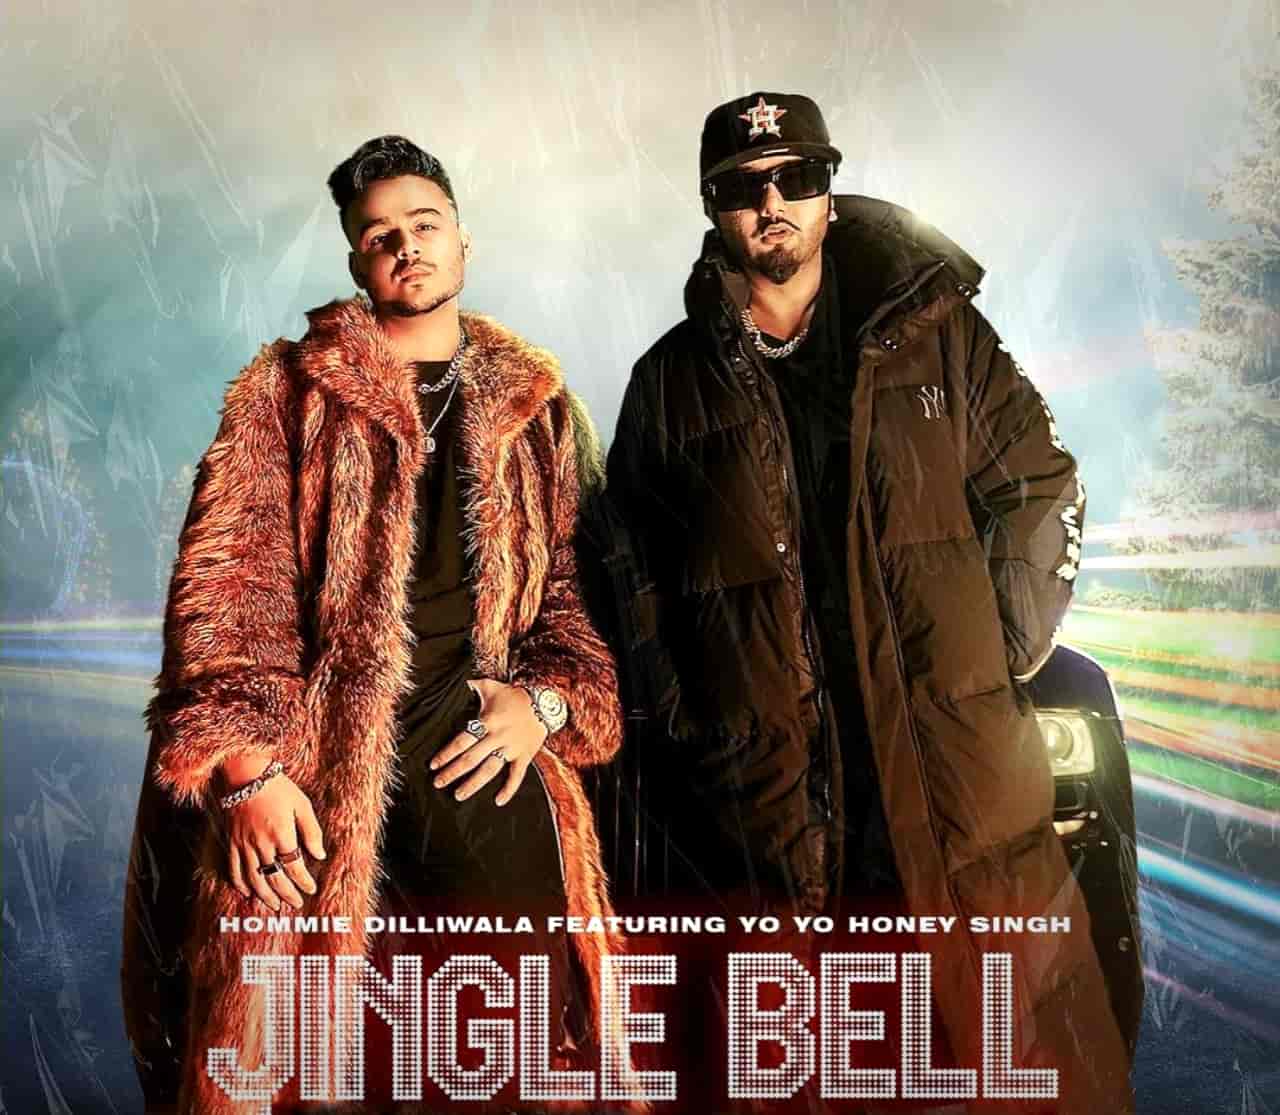 Jingle Bell Song Image Features Yo Yo Honey Singh and Hommie Dilliwala